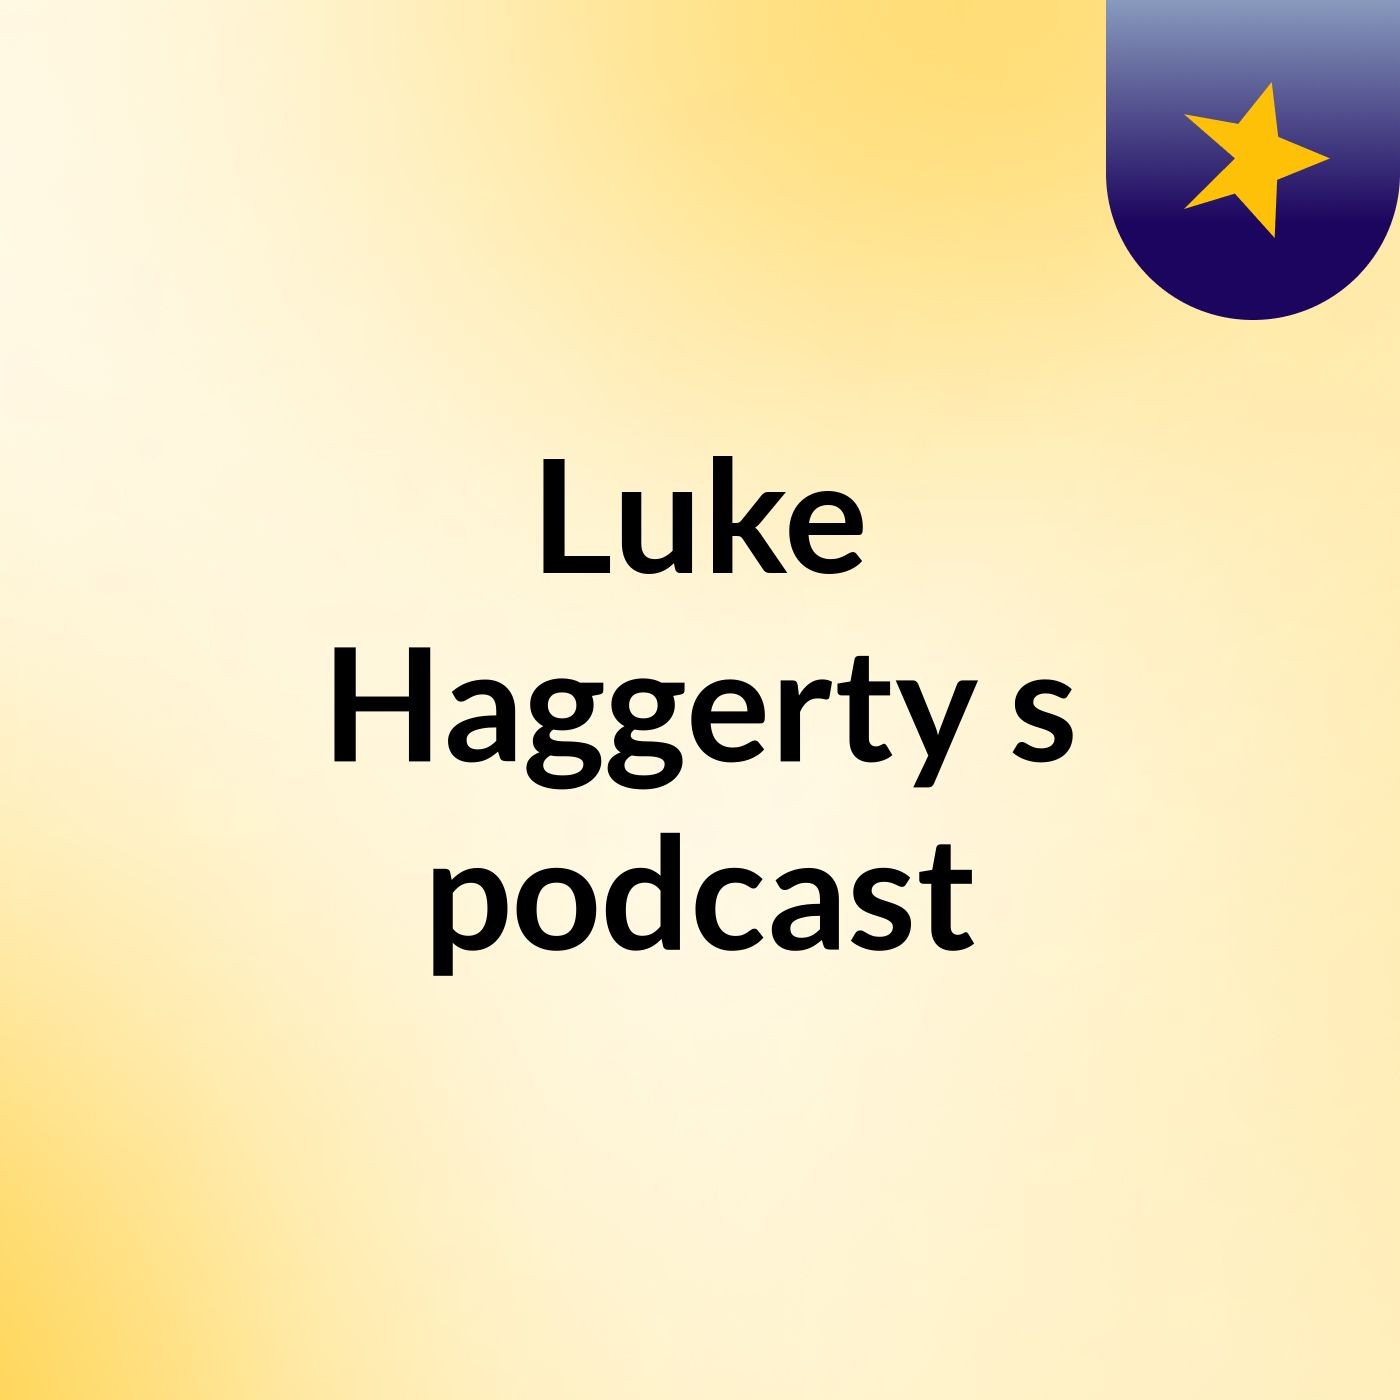 Luke Haggerty's podcast